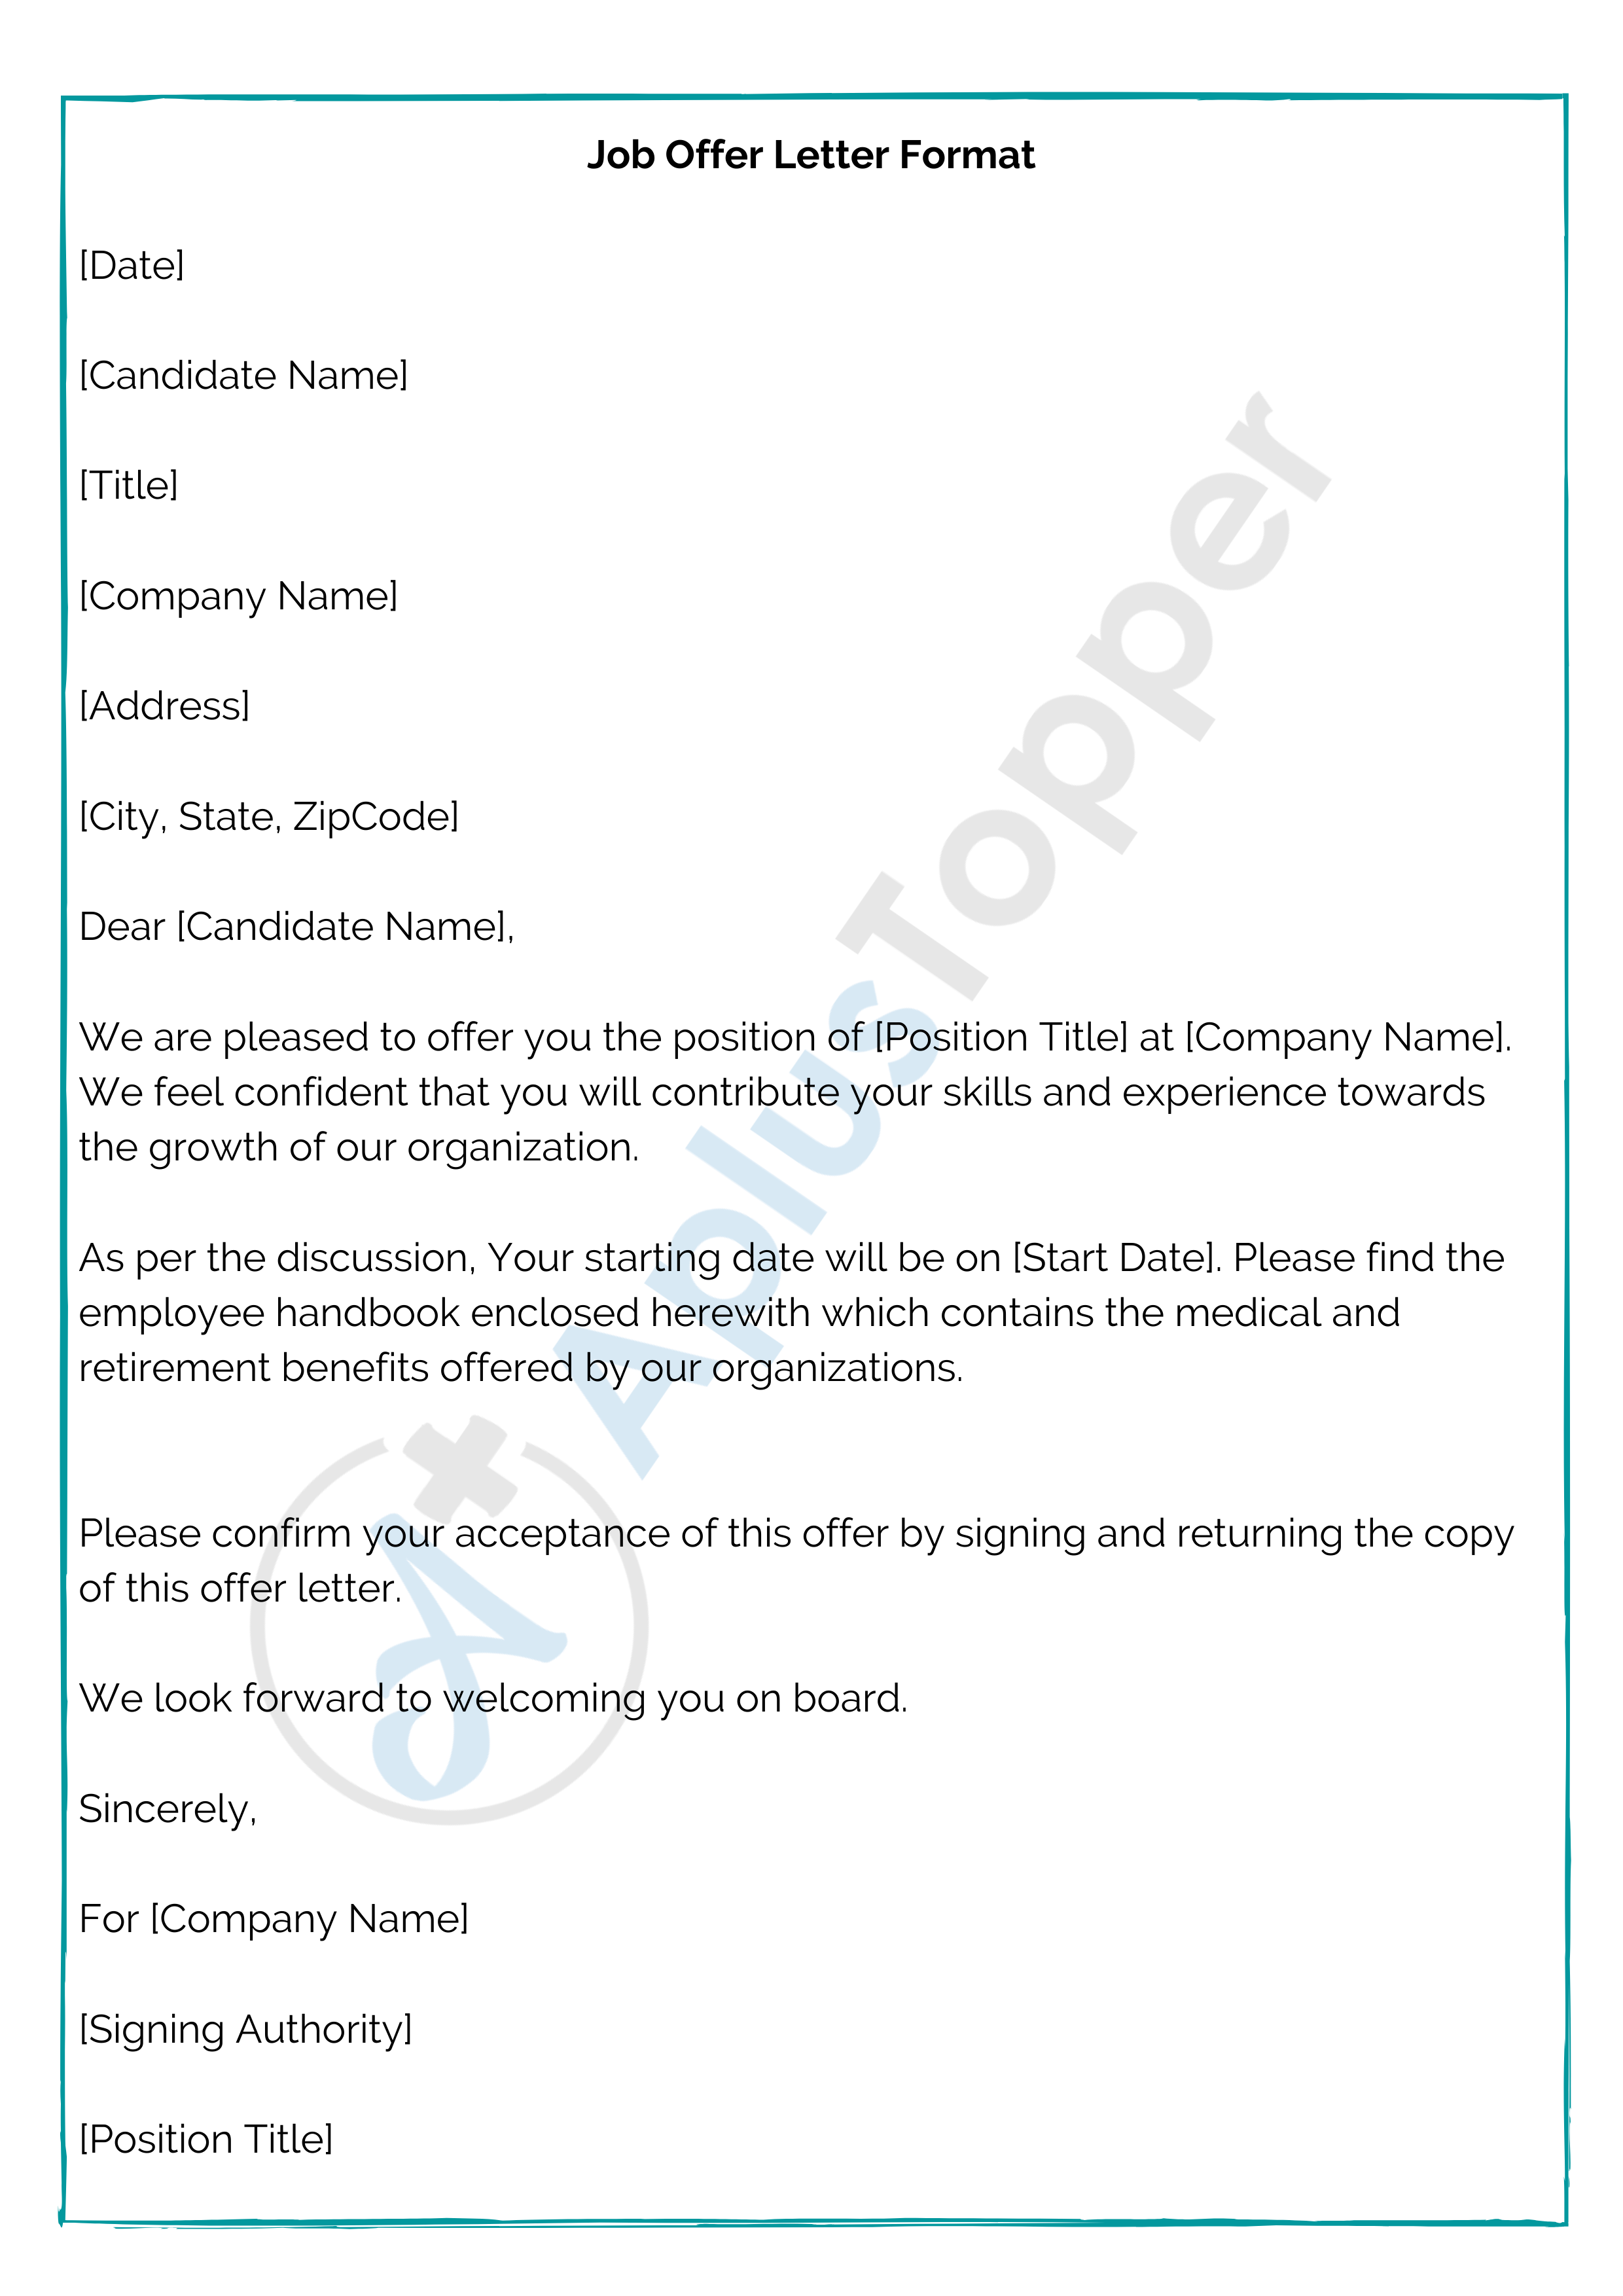 Offer Letter Format | Job Offer Letter Format, Samples, Template, Examples